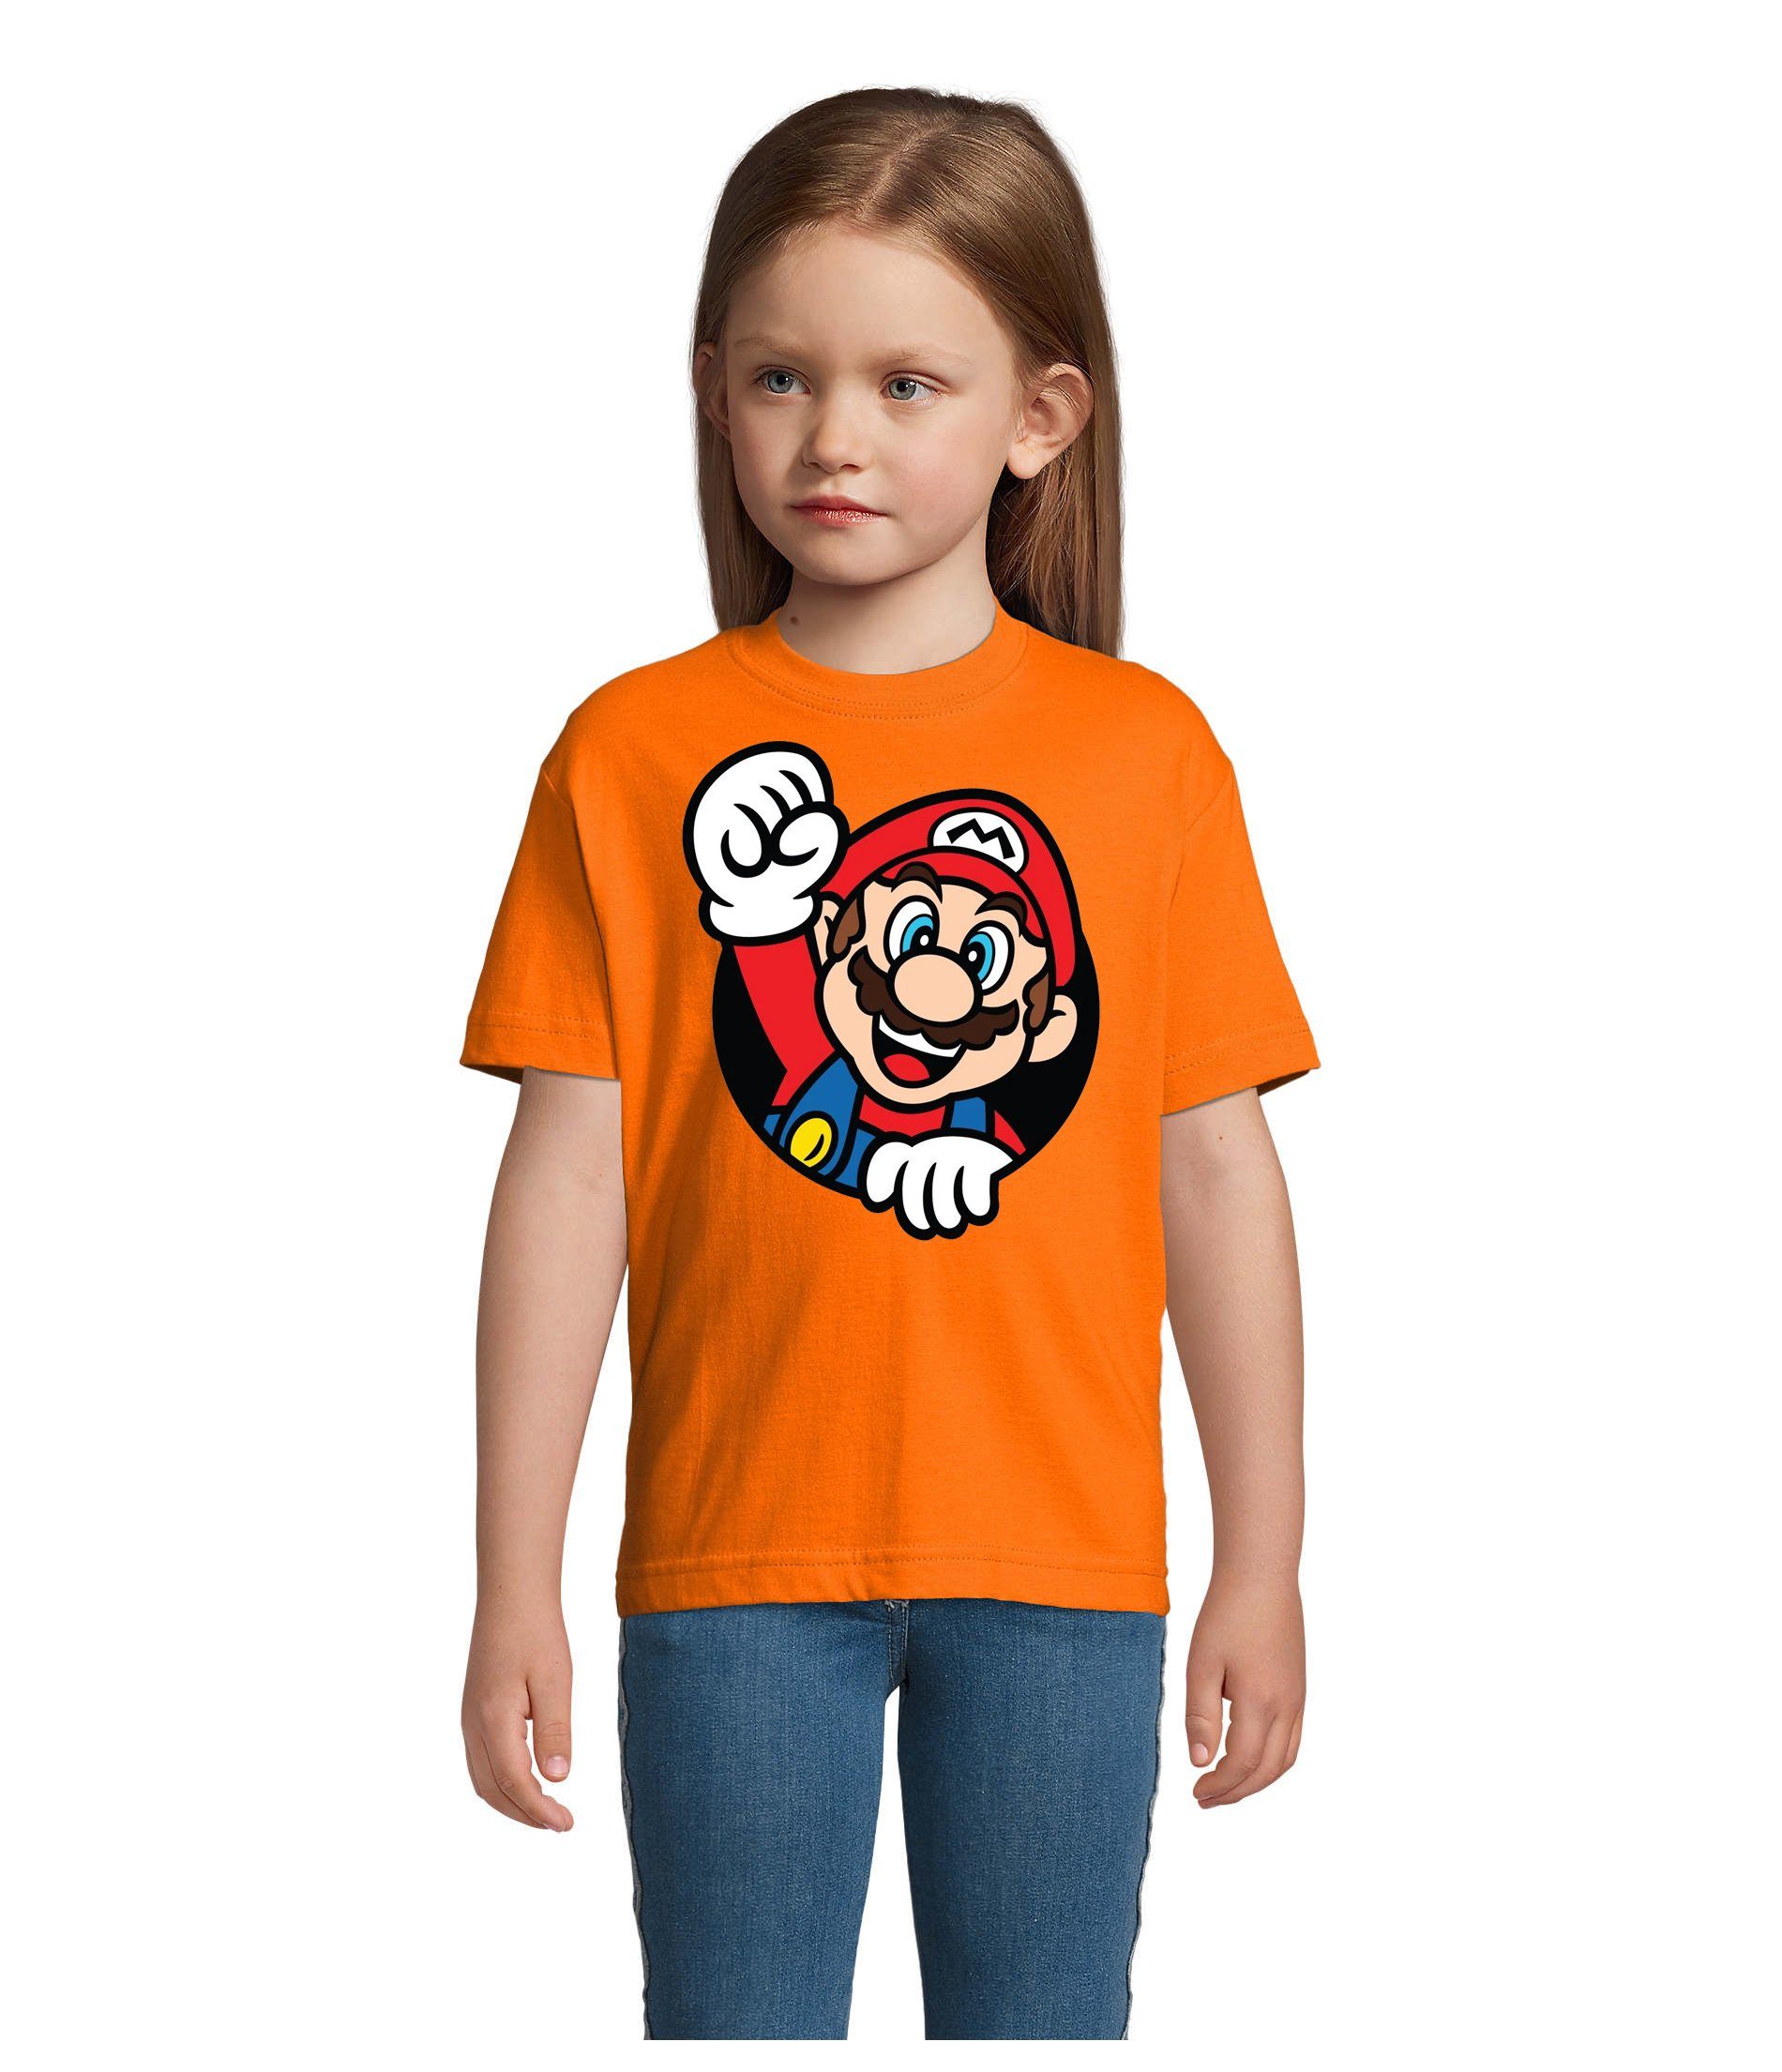 Blondie & Brownie Super Nerd Faust Gaming Orange Nintendo Konsole Konsole Kinder Spiel T-Shirt Mario